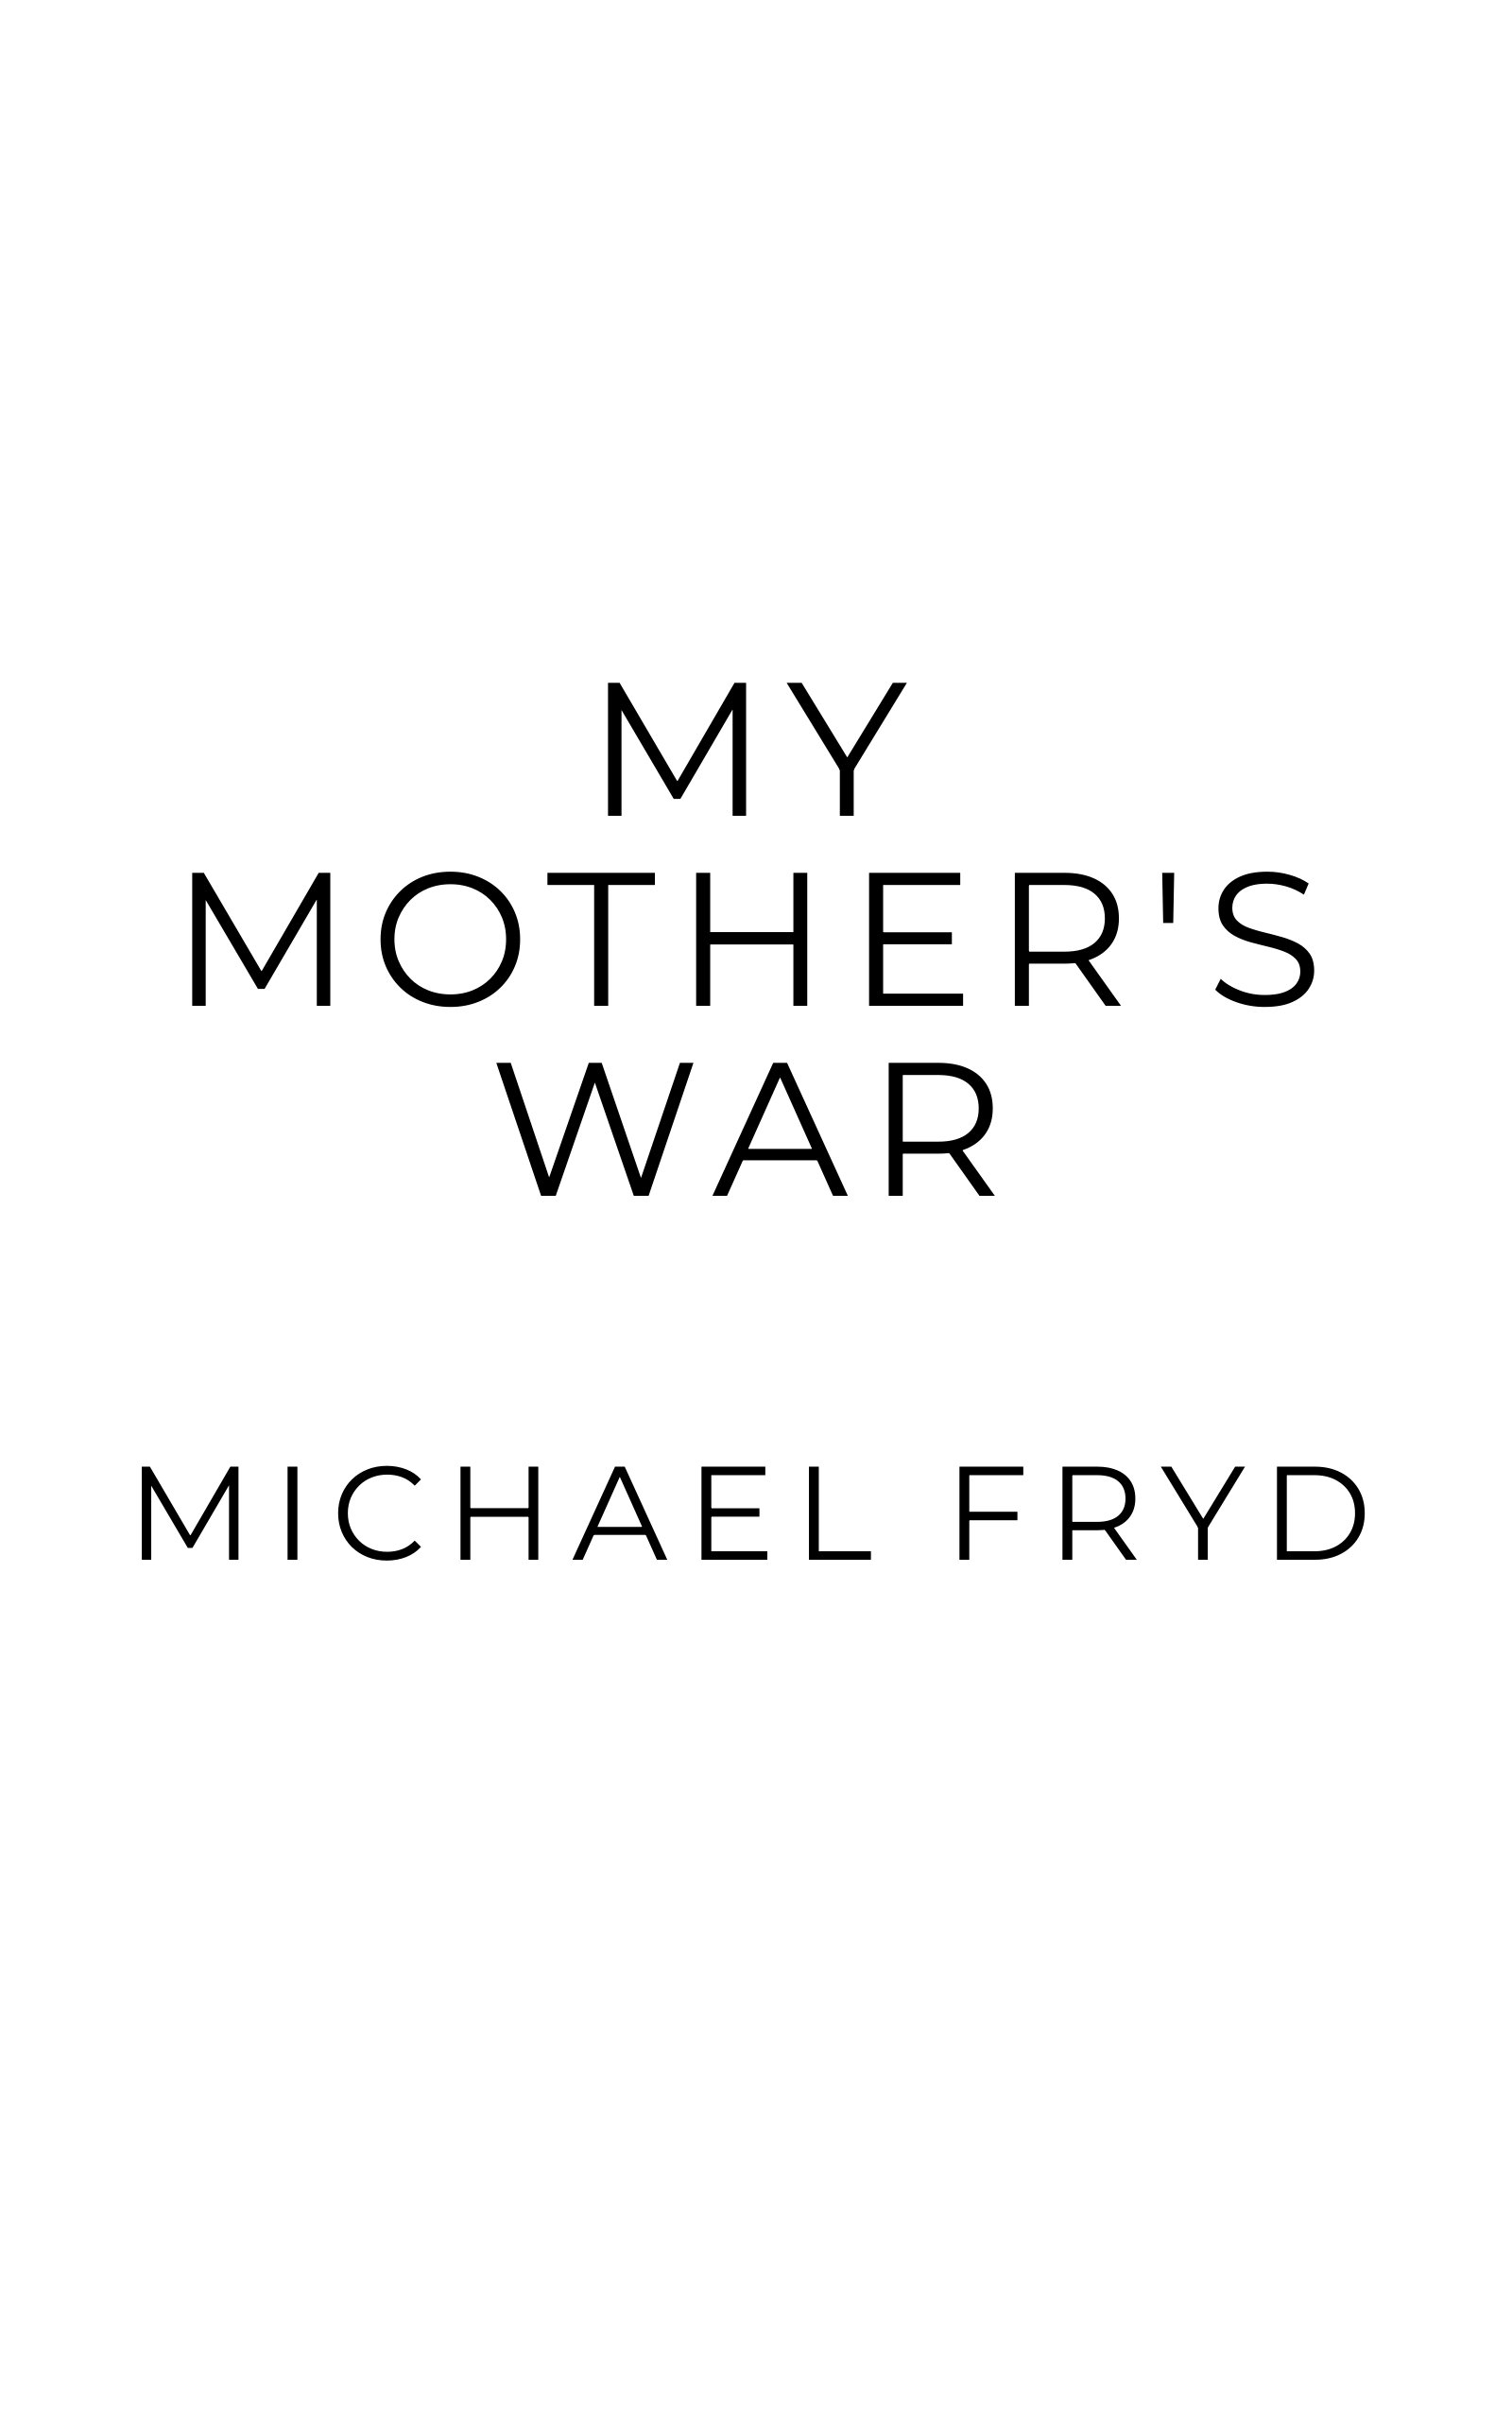 My Mother's War